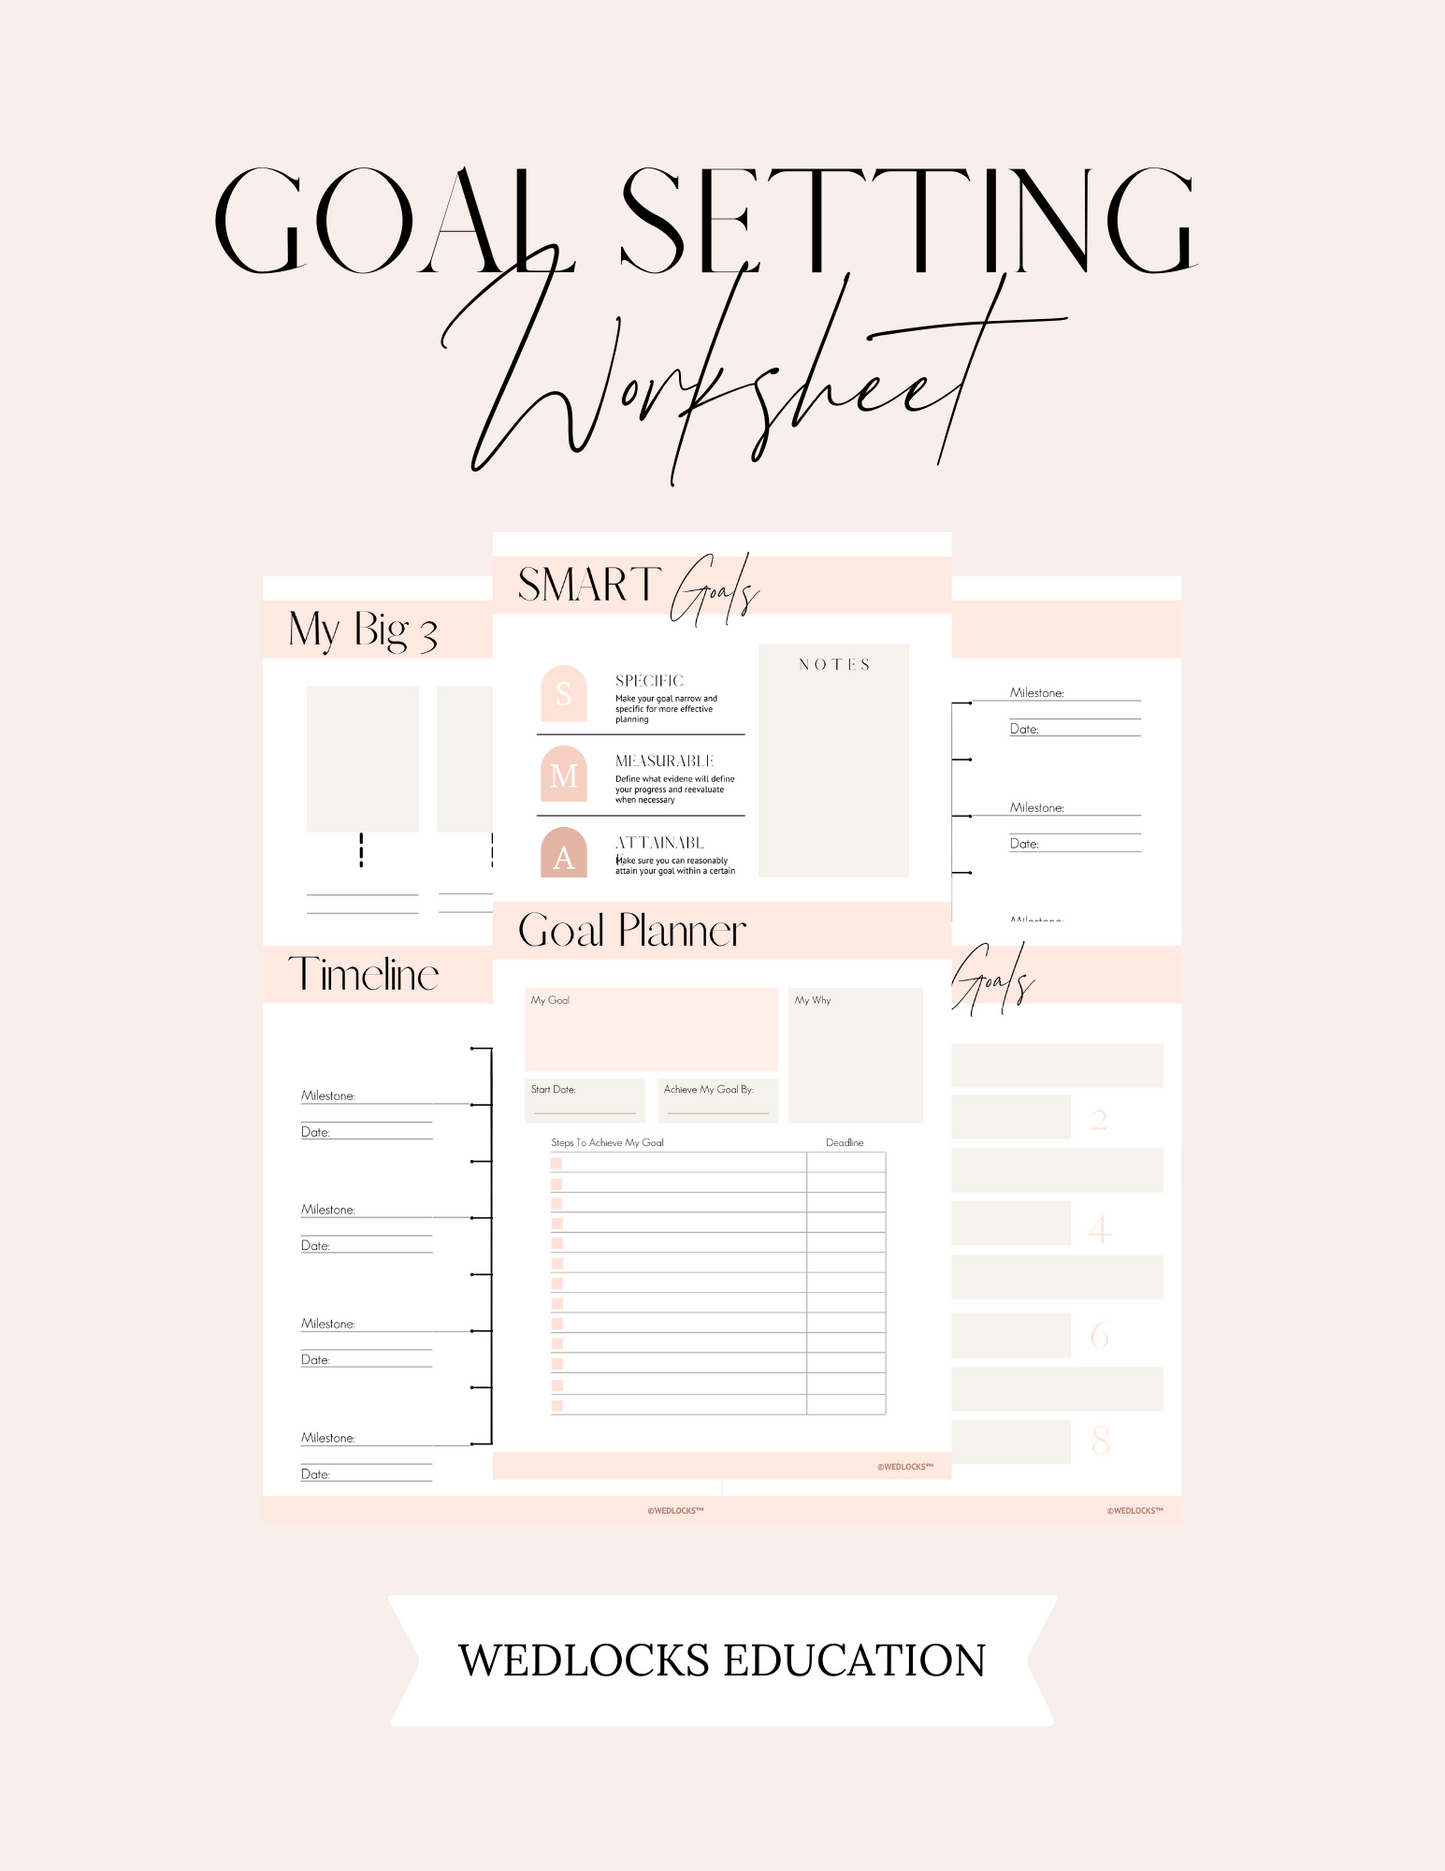 Goal Planning Worksheet